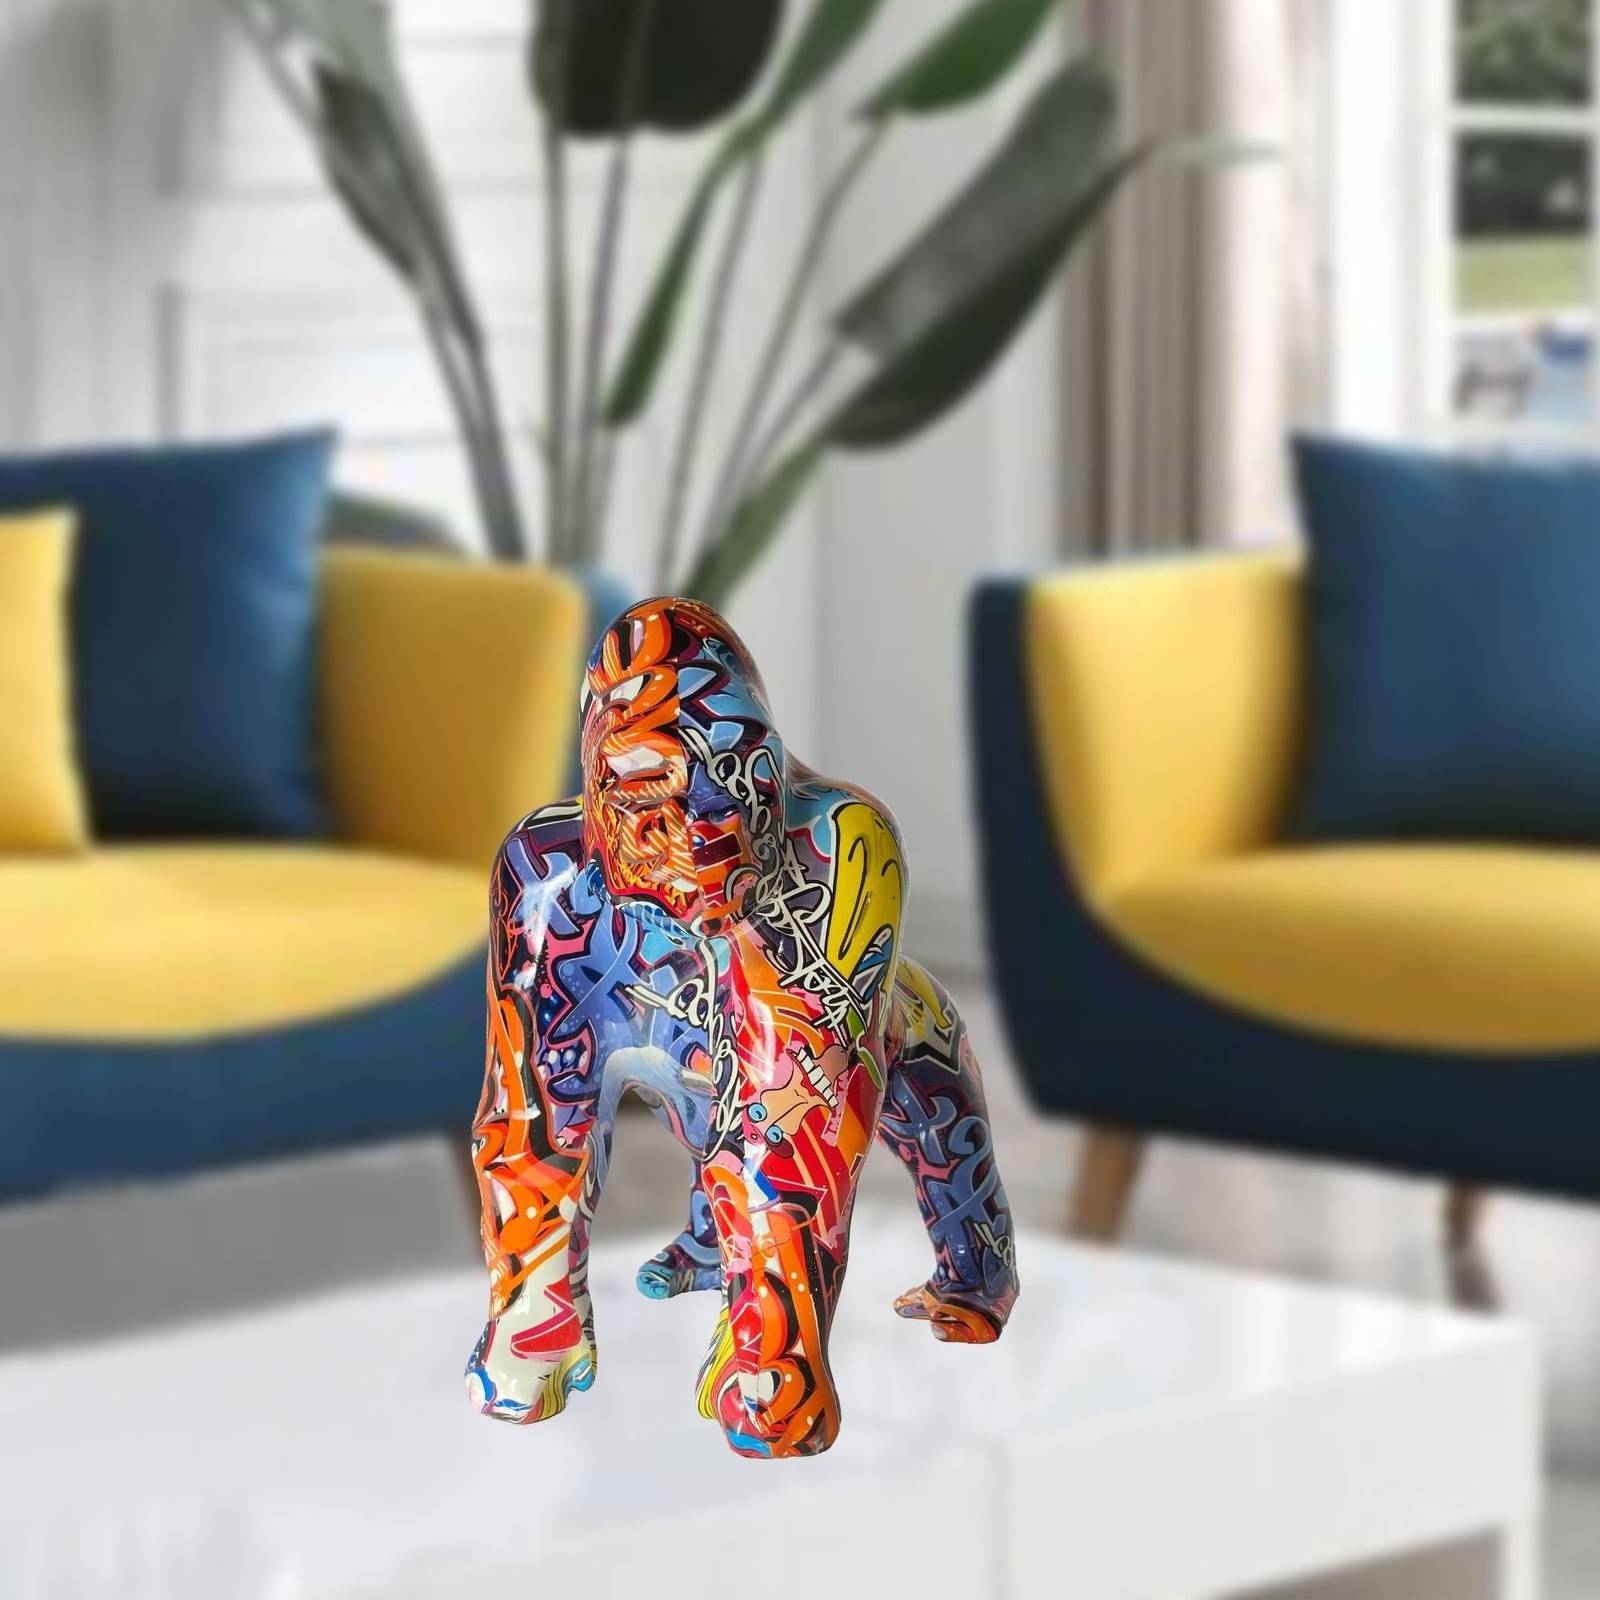 Improvinglife Sculpture Gorilla Multicolor and 50 similar items